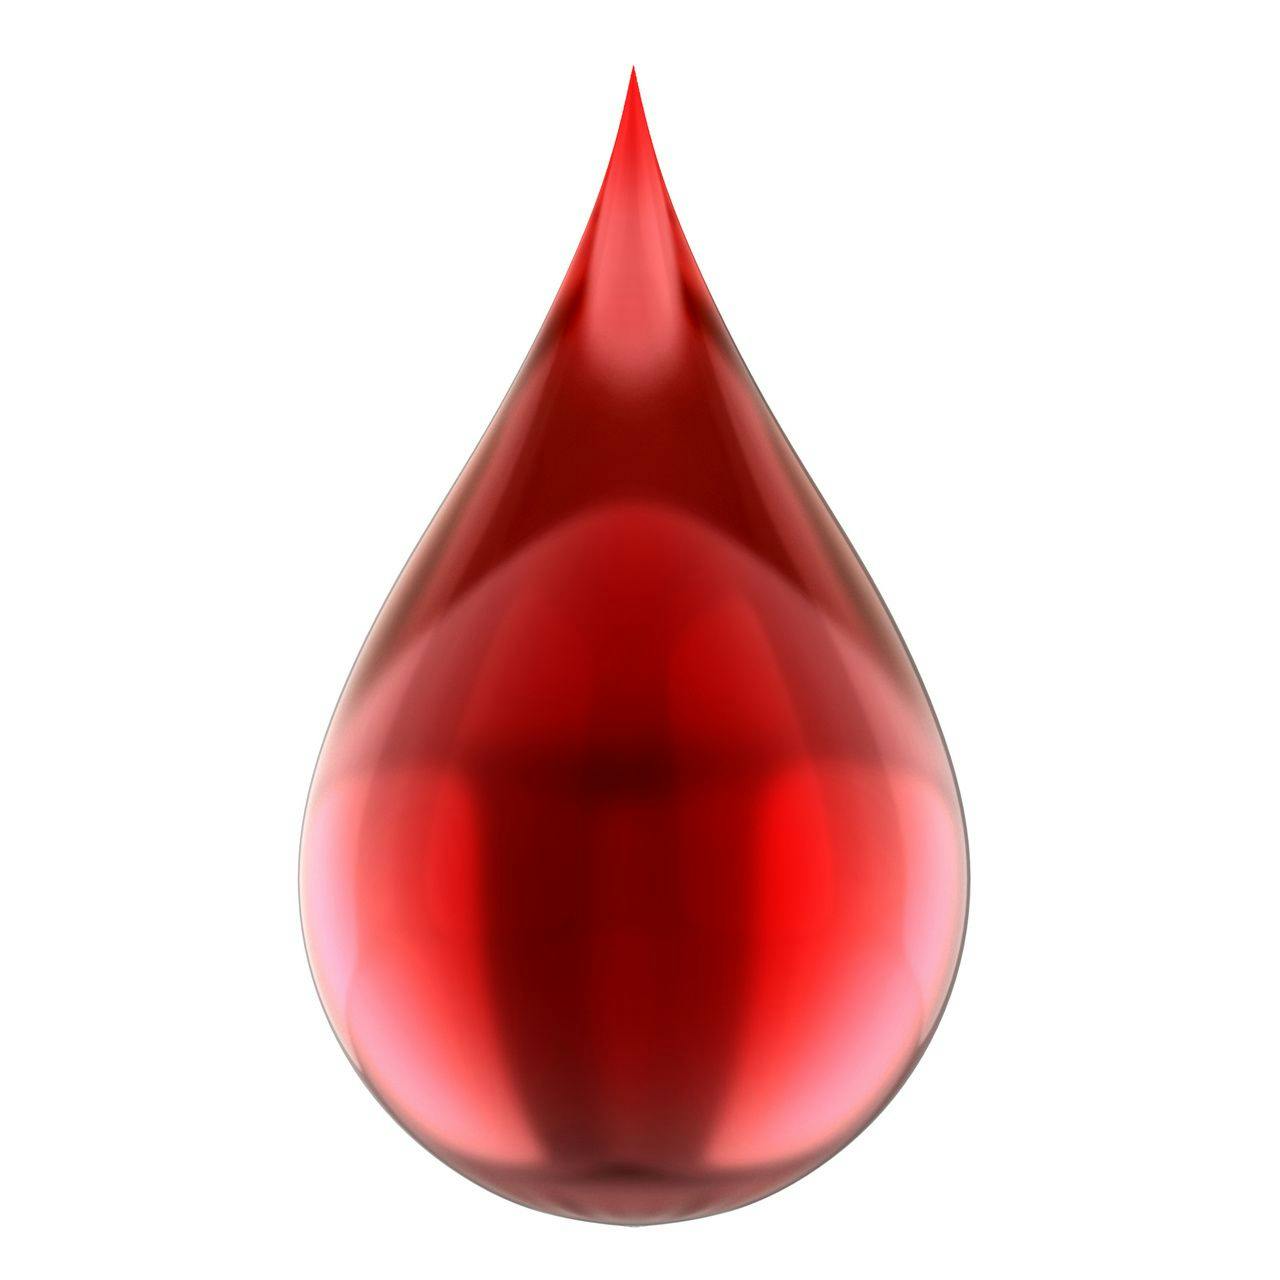 Enlarged drop of blood